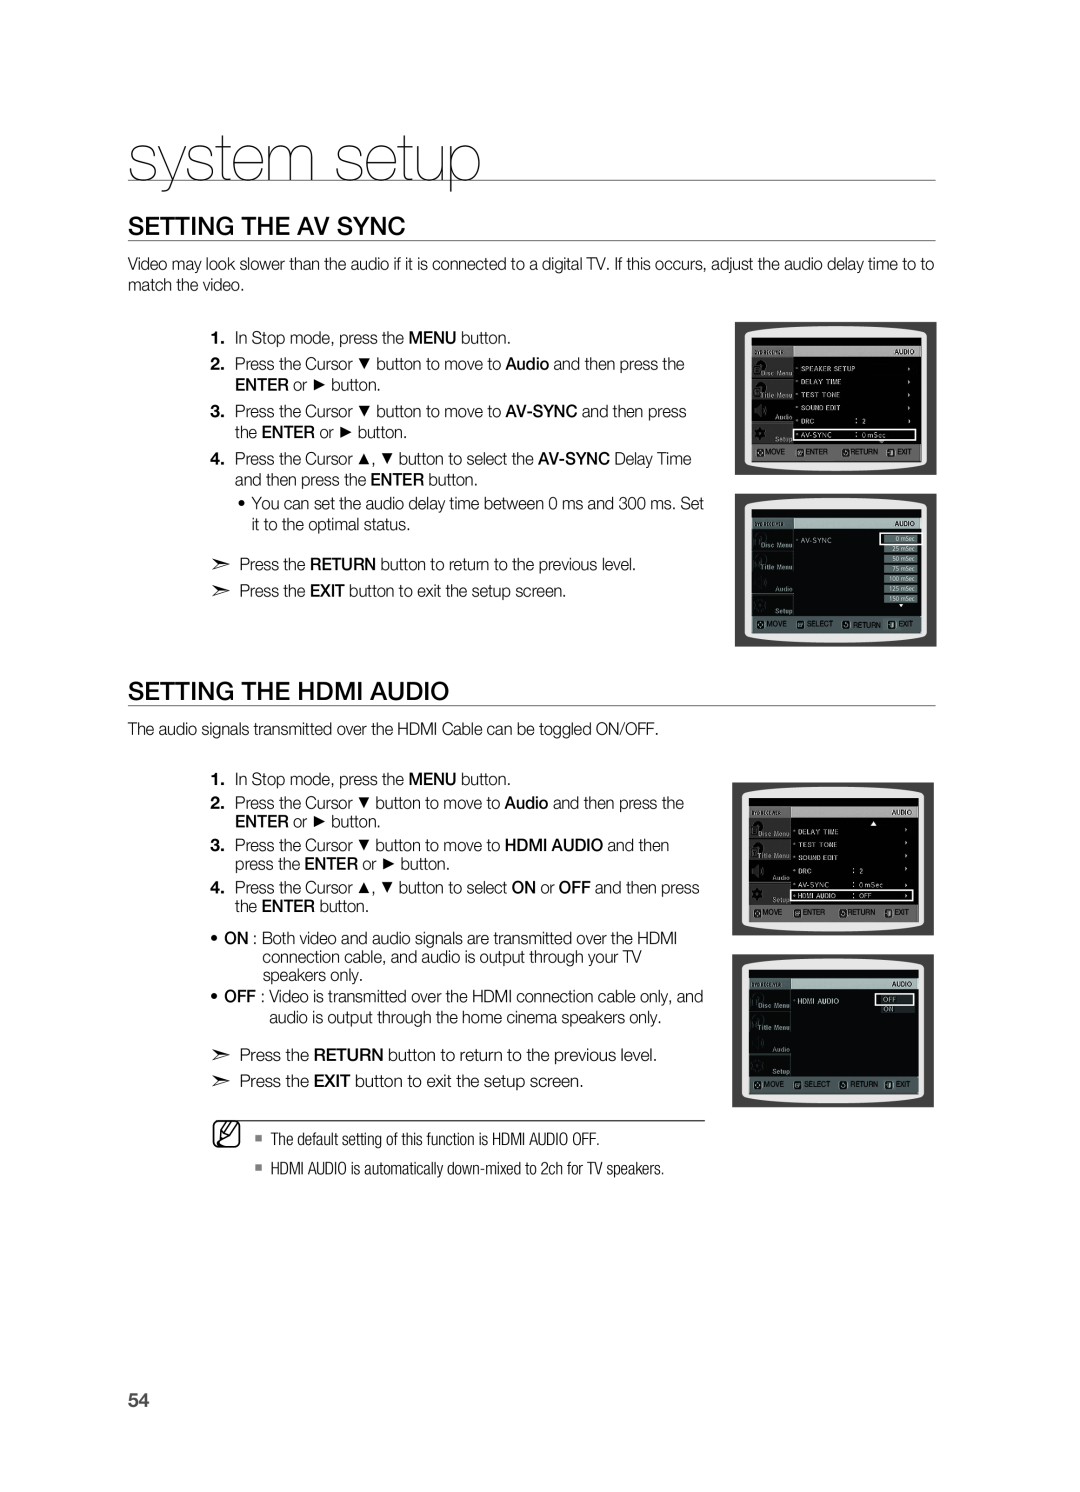 Samsung HT-TX715 user manual Setting the AV SYNC, Setting the HDMI Audio, system setup 